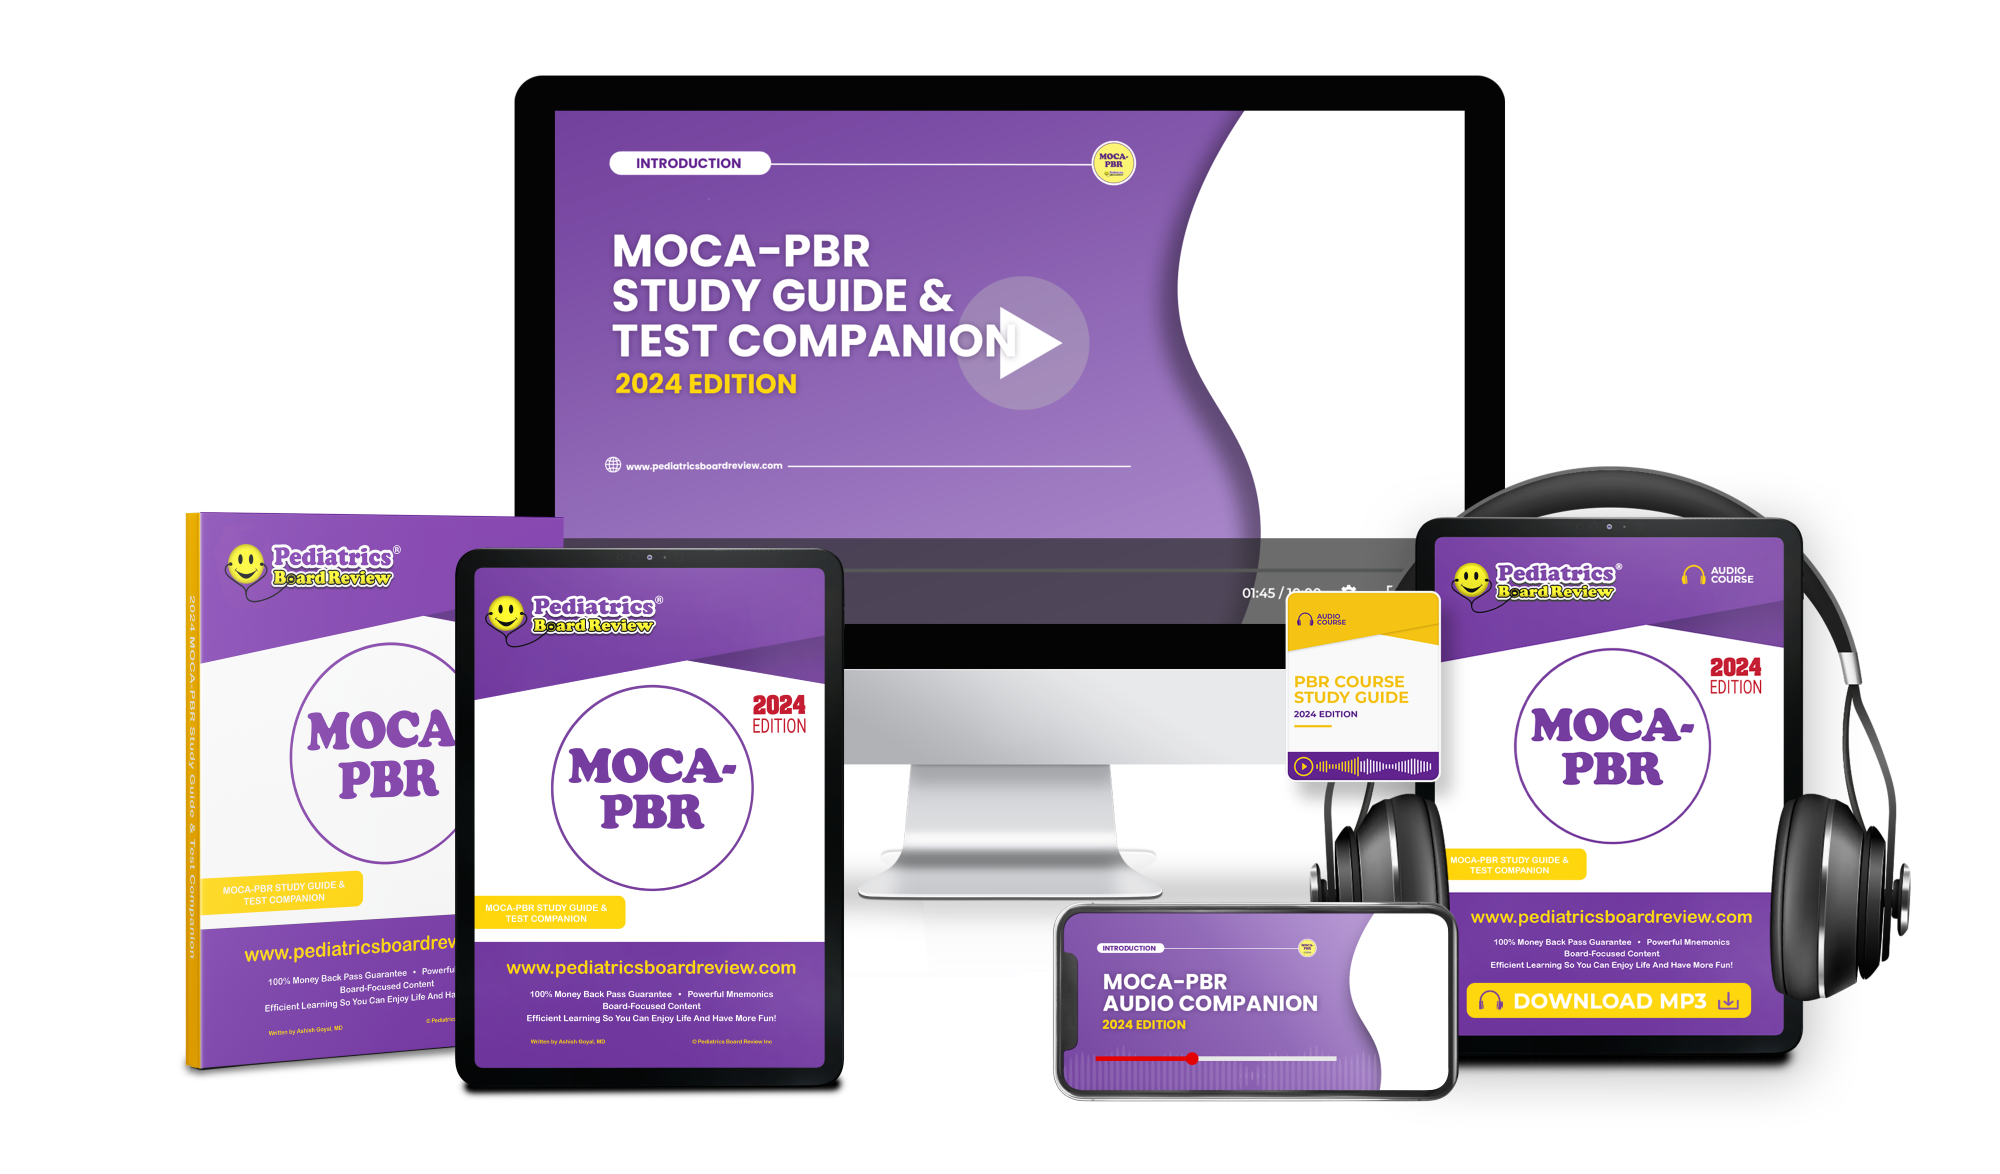 MOCA-PBR Study Guide and Test Companion